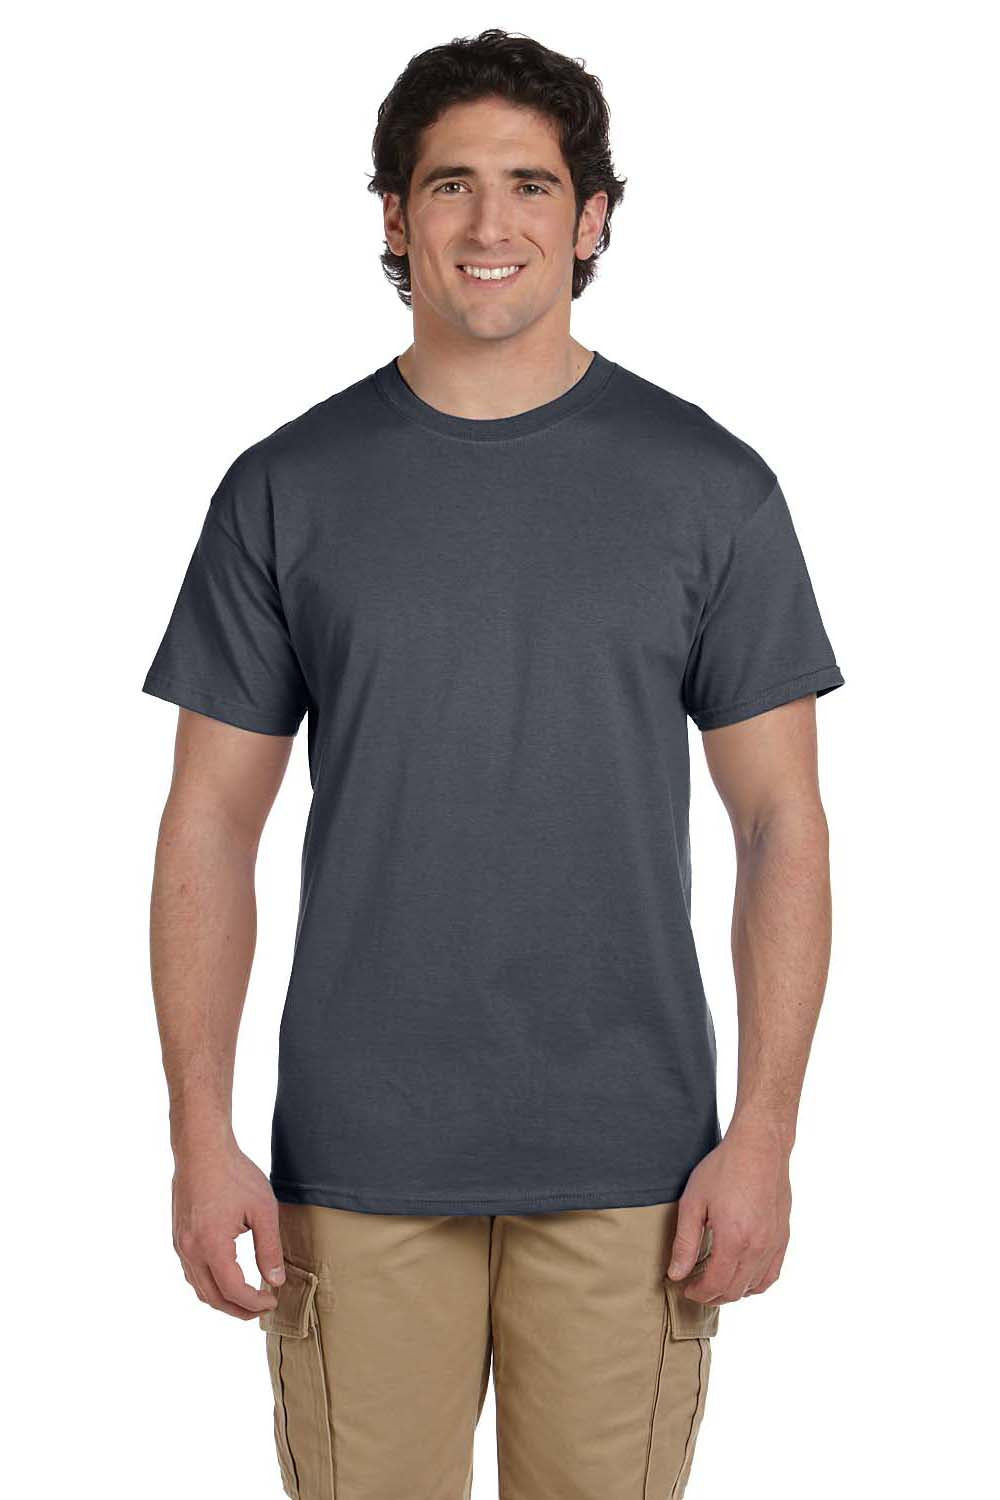 Hanes 5170 Mens EcoSmart Short Sleeve Crewneck T-Shirt Smoke Grey Front